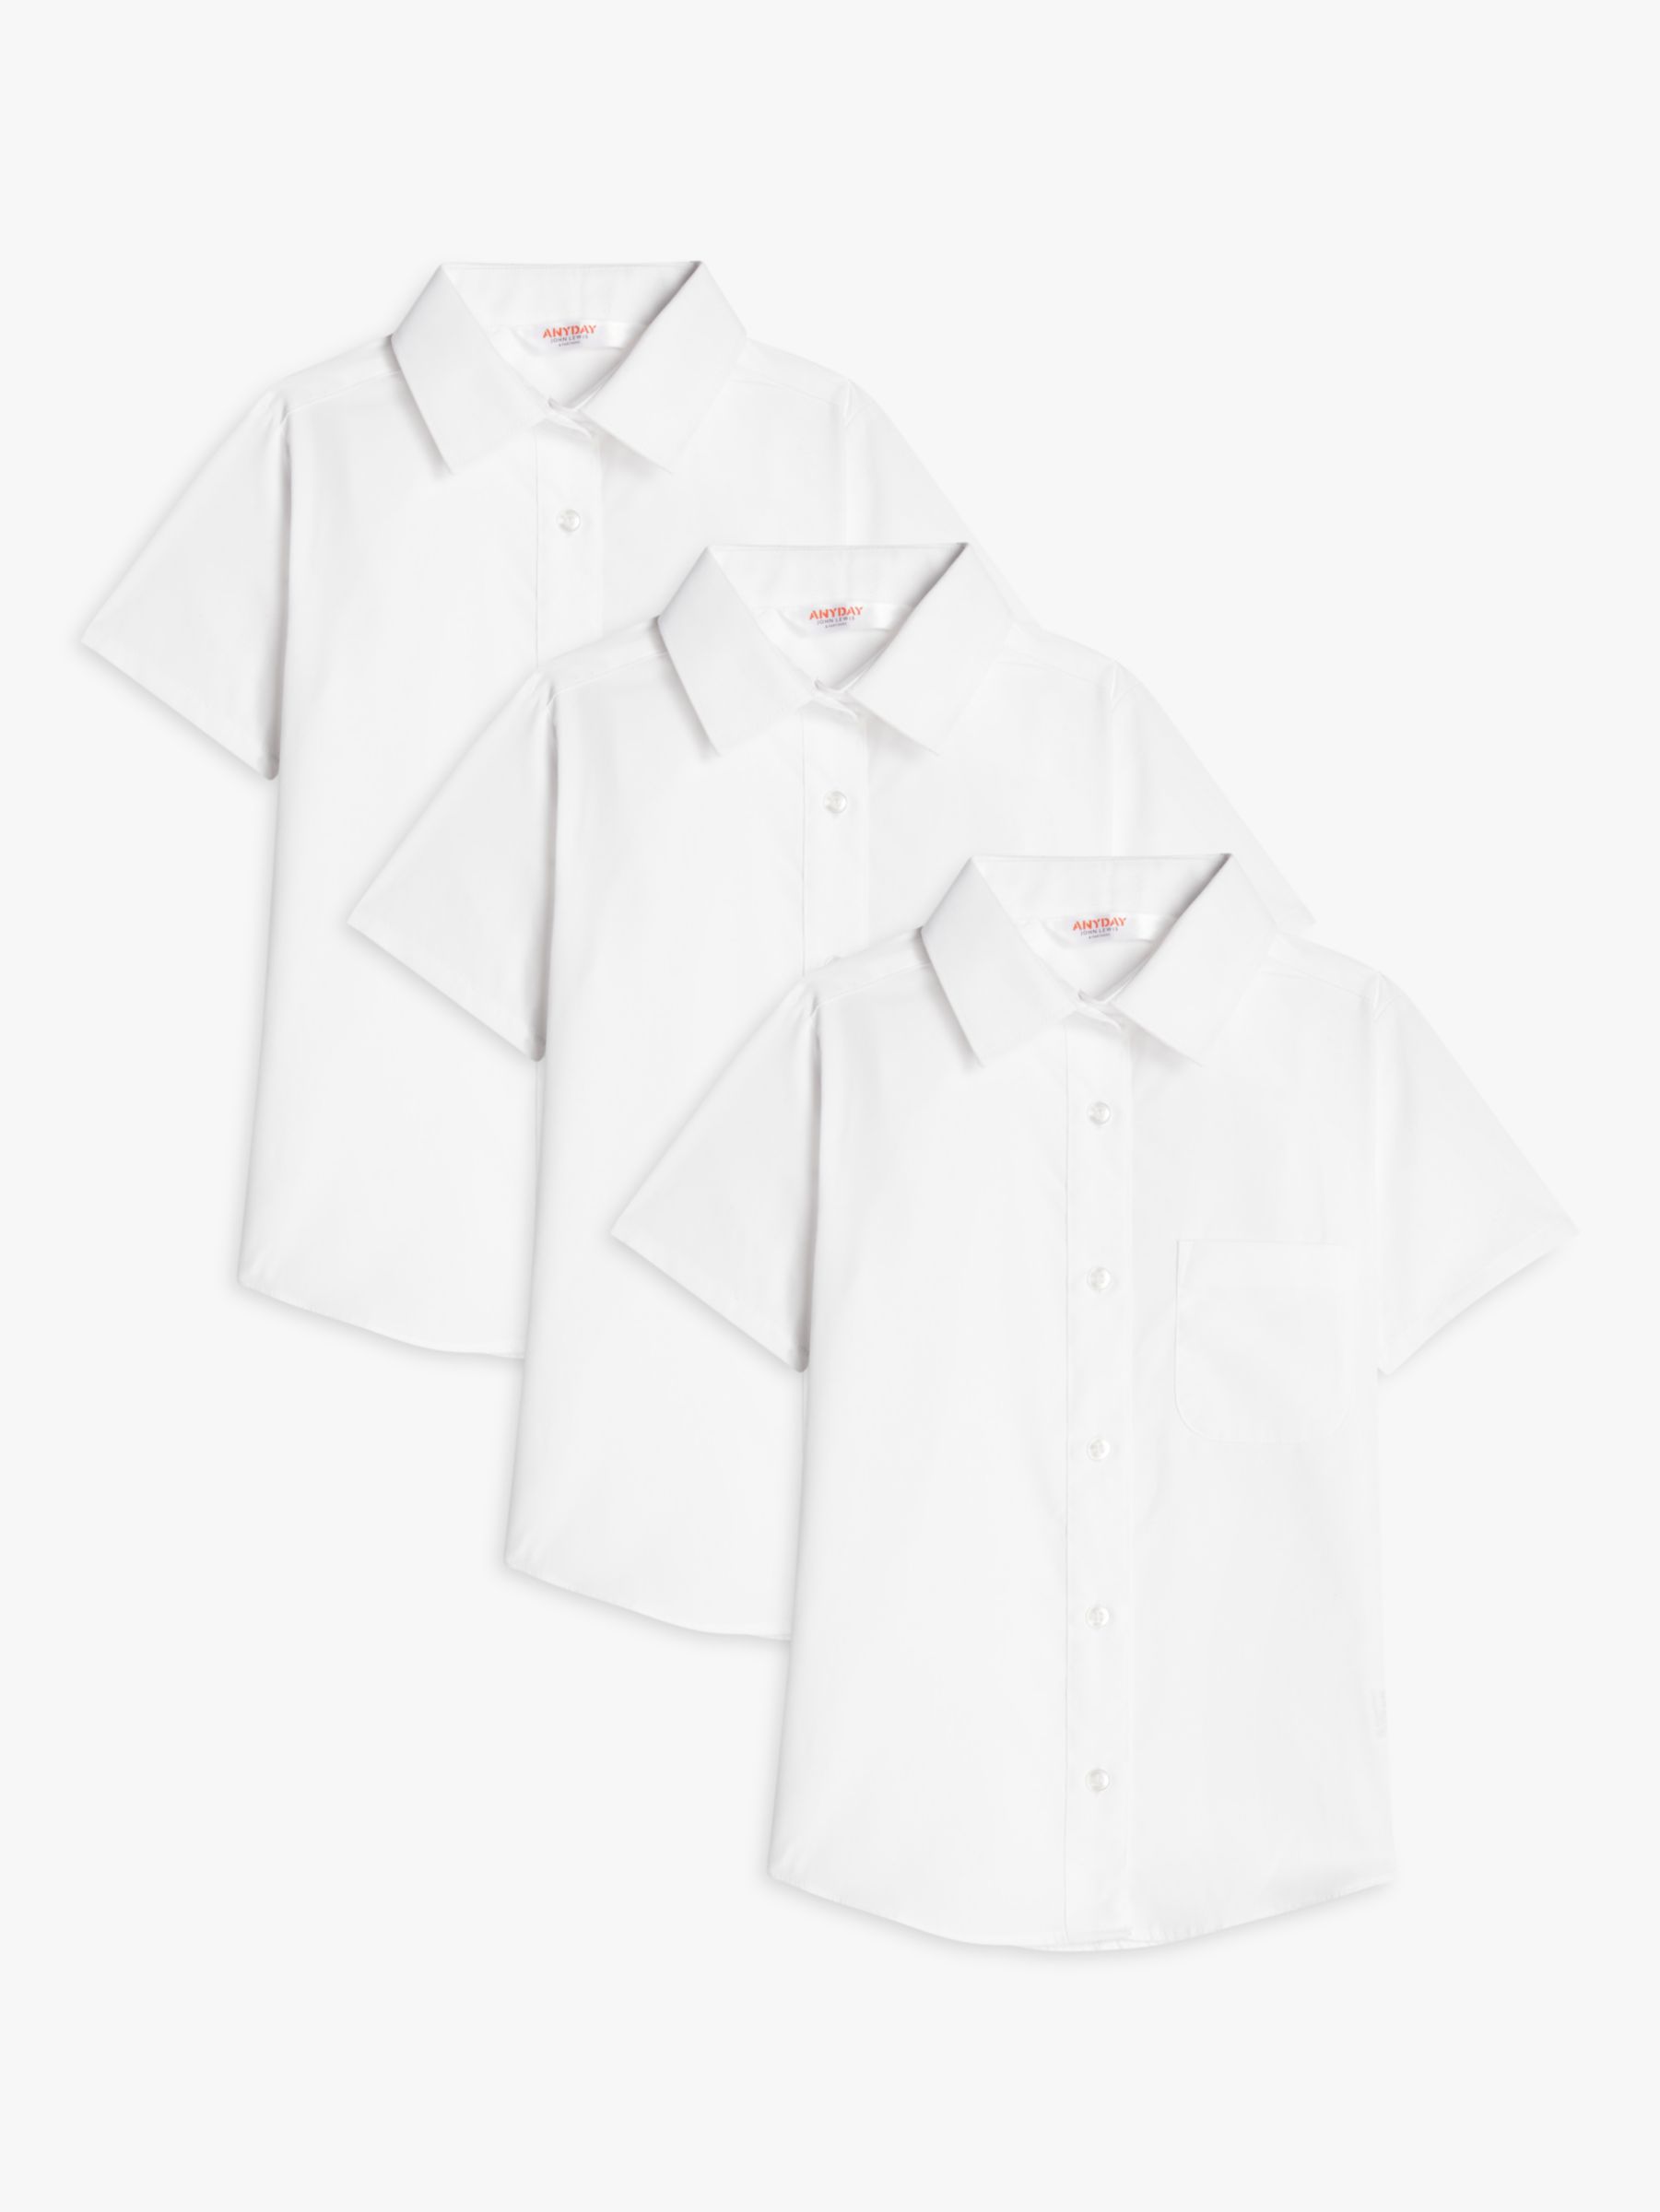 Buy John Lewis ANYDAY Girls' Short Sleeve School Blouse, Pack of 3, White Online at johnlewis.com